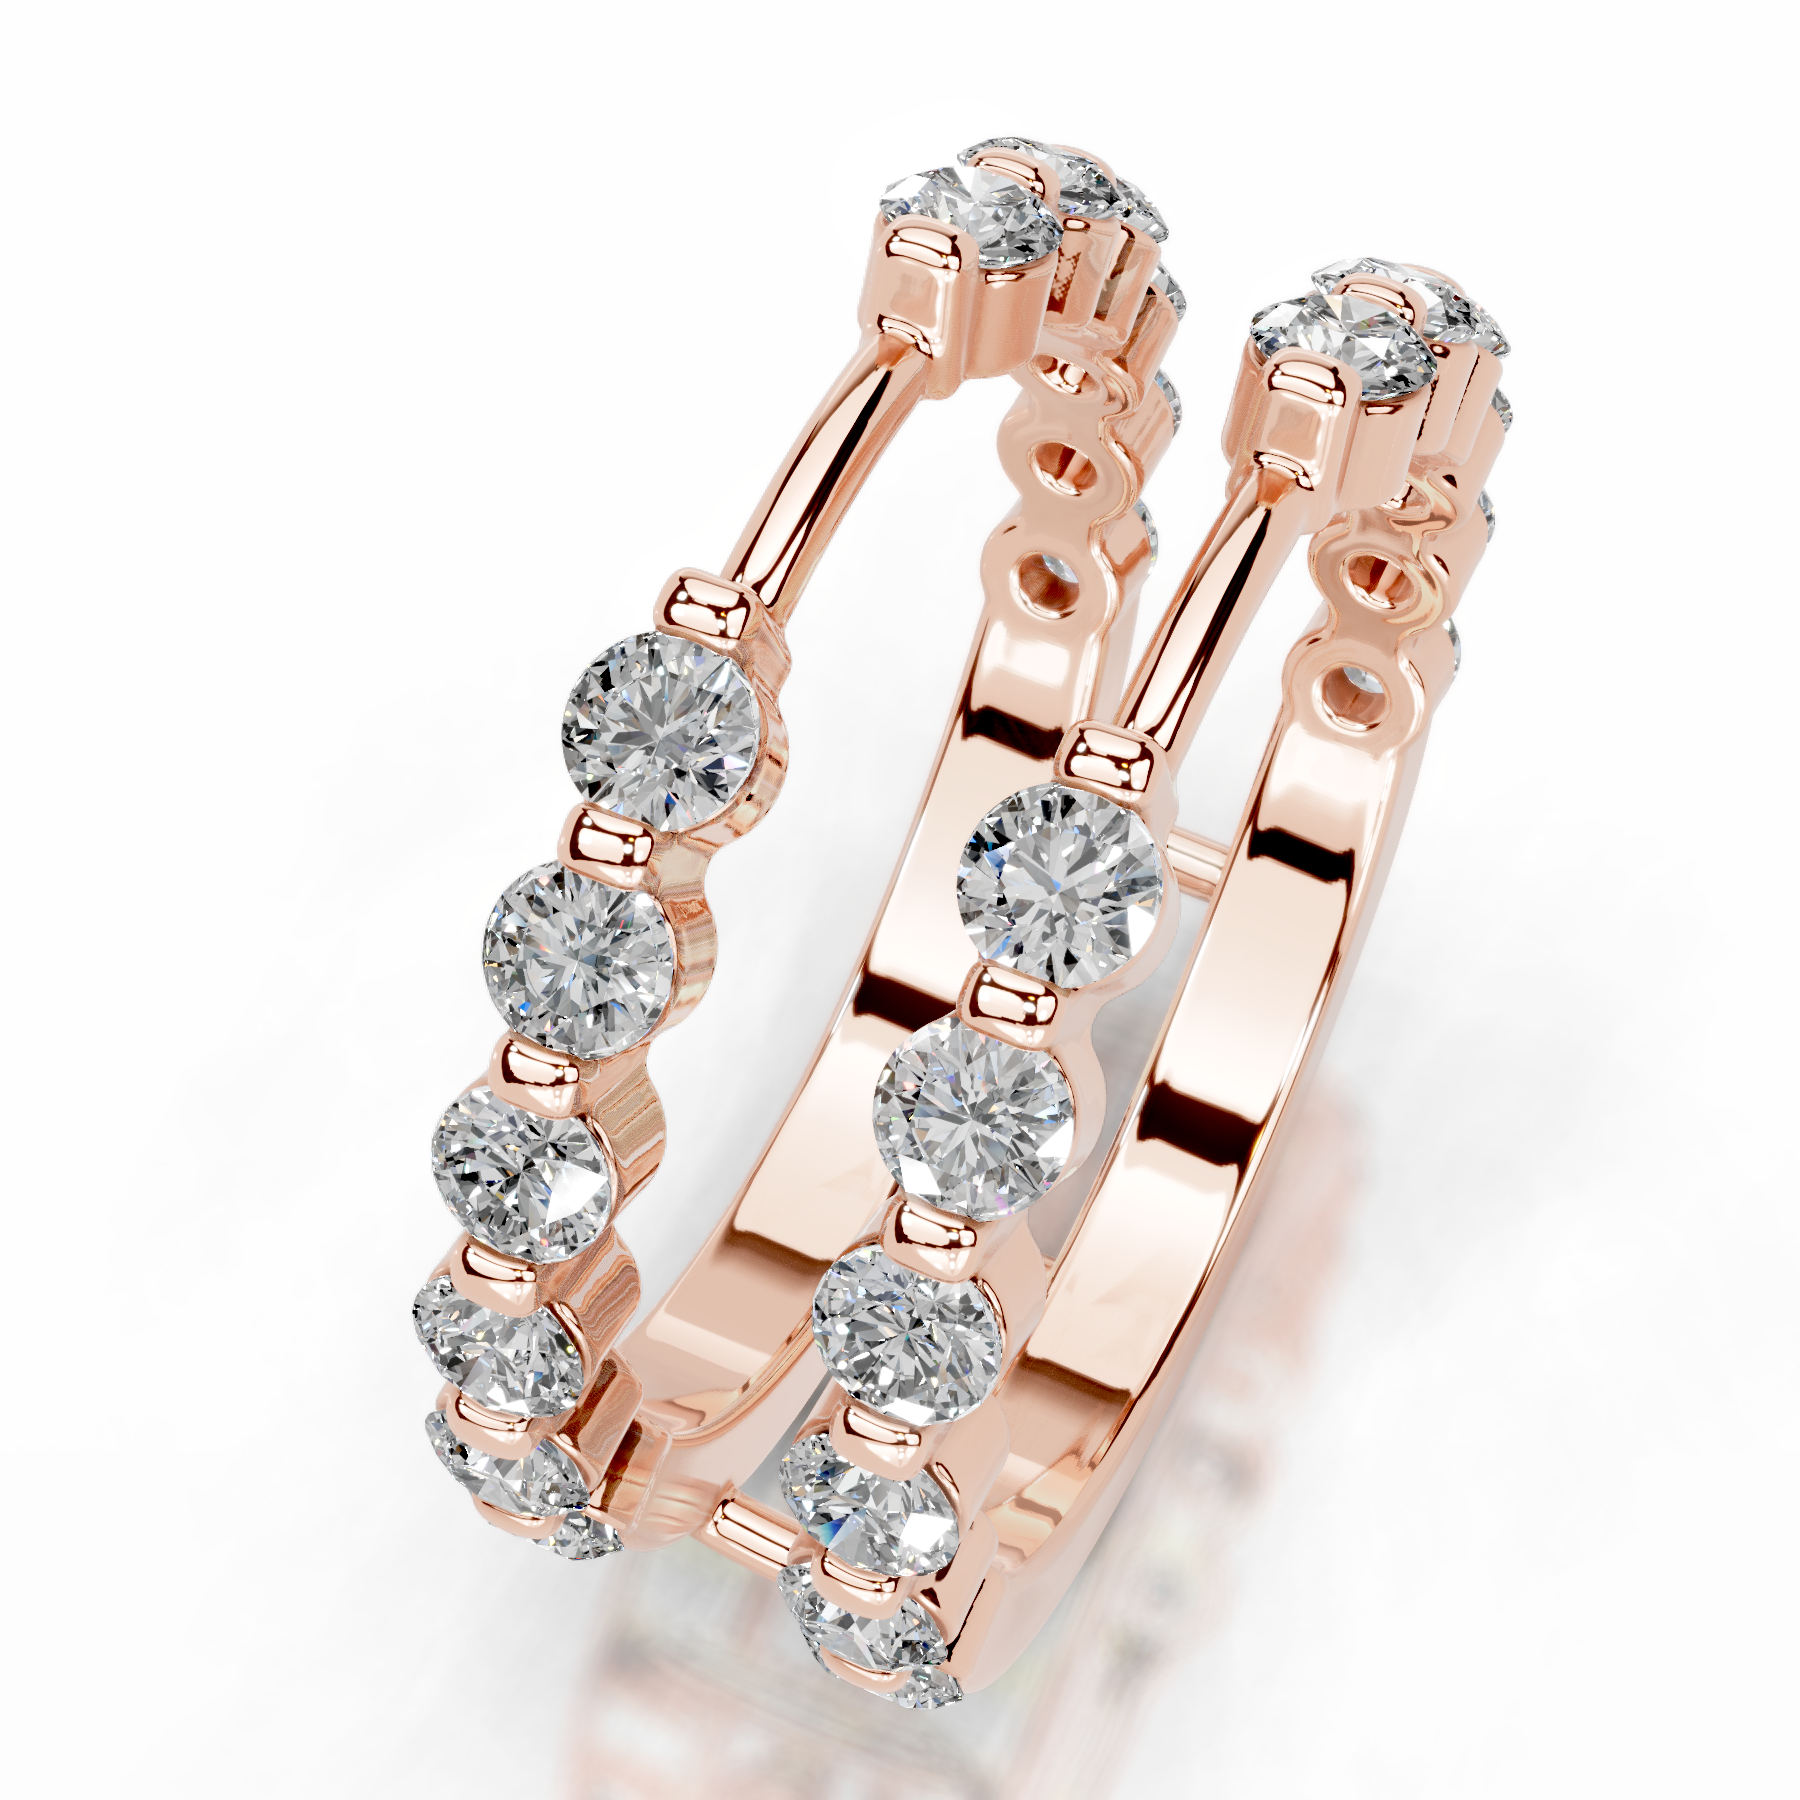 Ashley Diamond Wedding Ring   (1.25 Carat) -14K Rose Gold